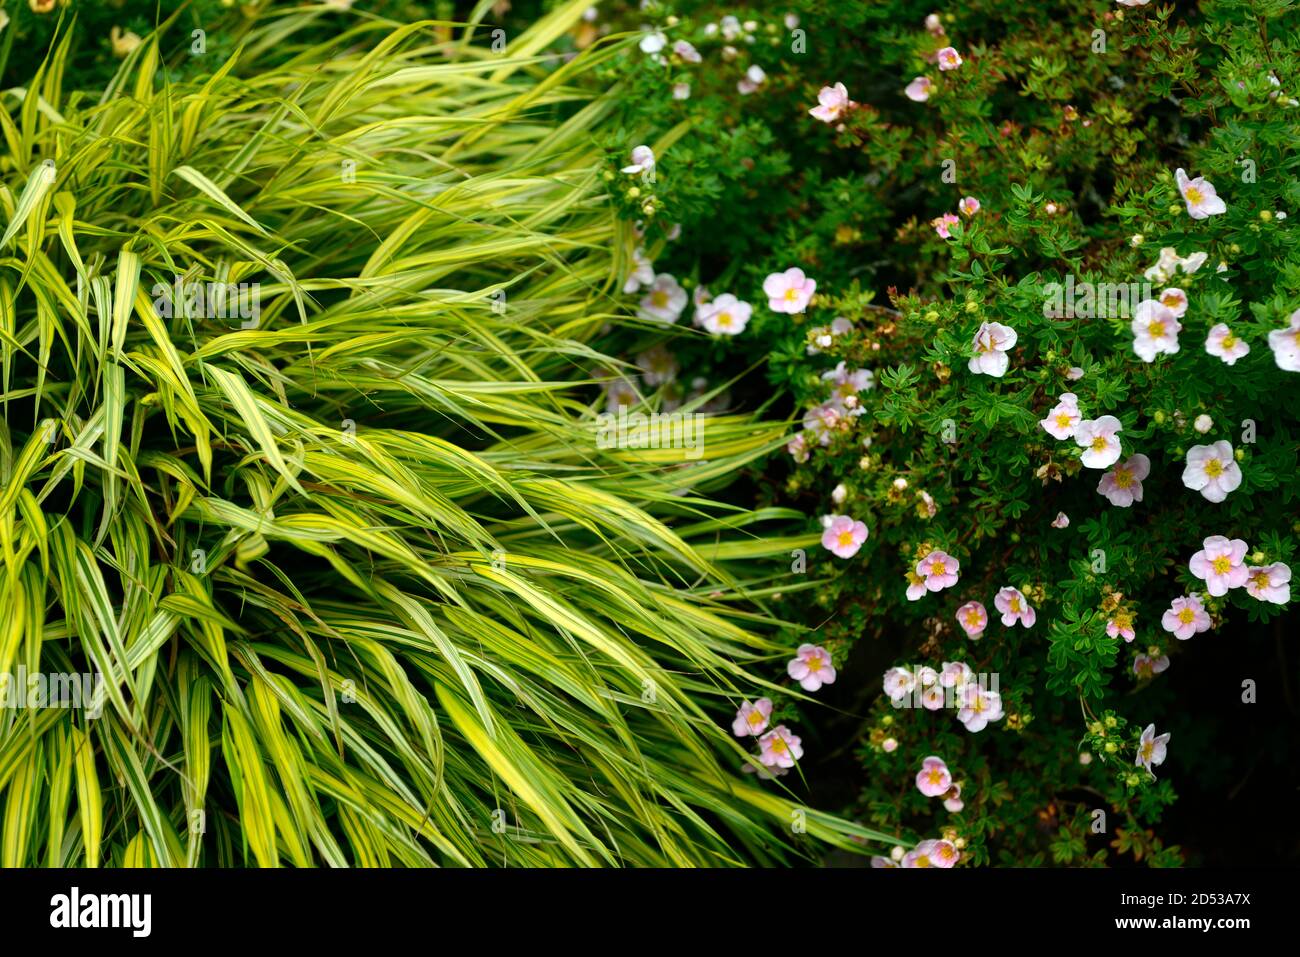 Hakonechloa macra Aureola,Golden Japanese forest grass,grasses,Helianthemum Wisley Pink,rock rose,variegated,foliage,leaves,shade,shady,shaded,garden, Stock Photo